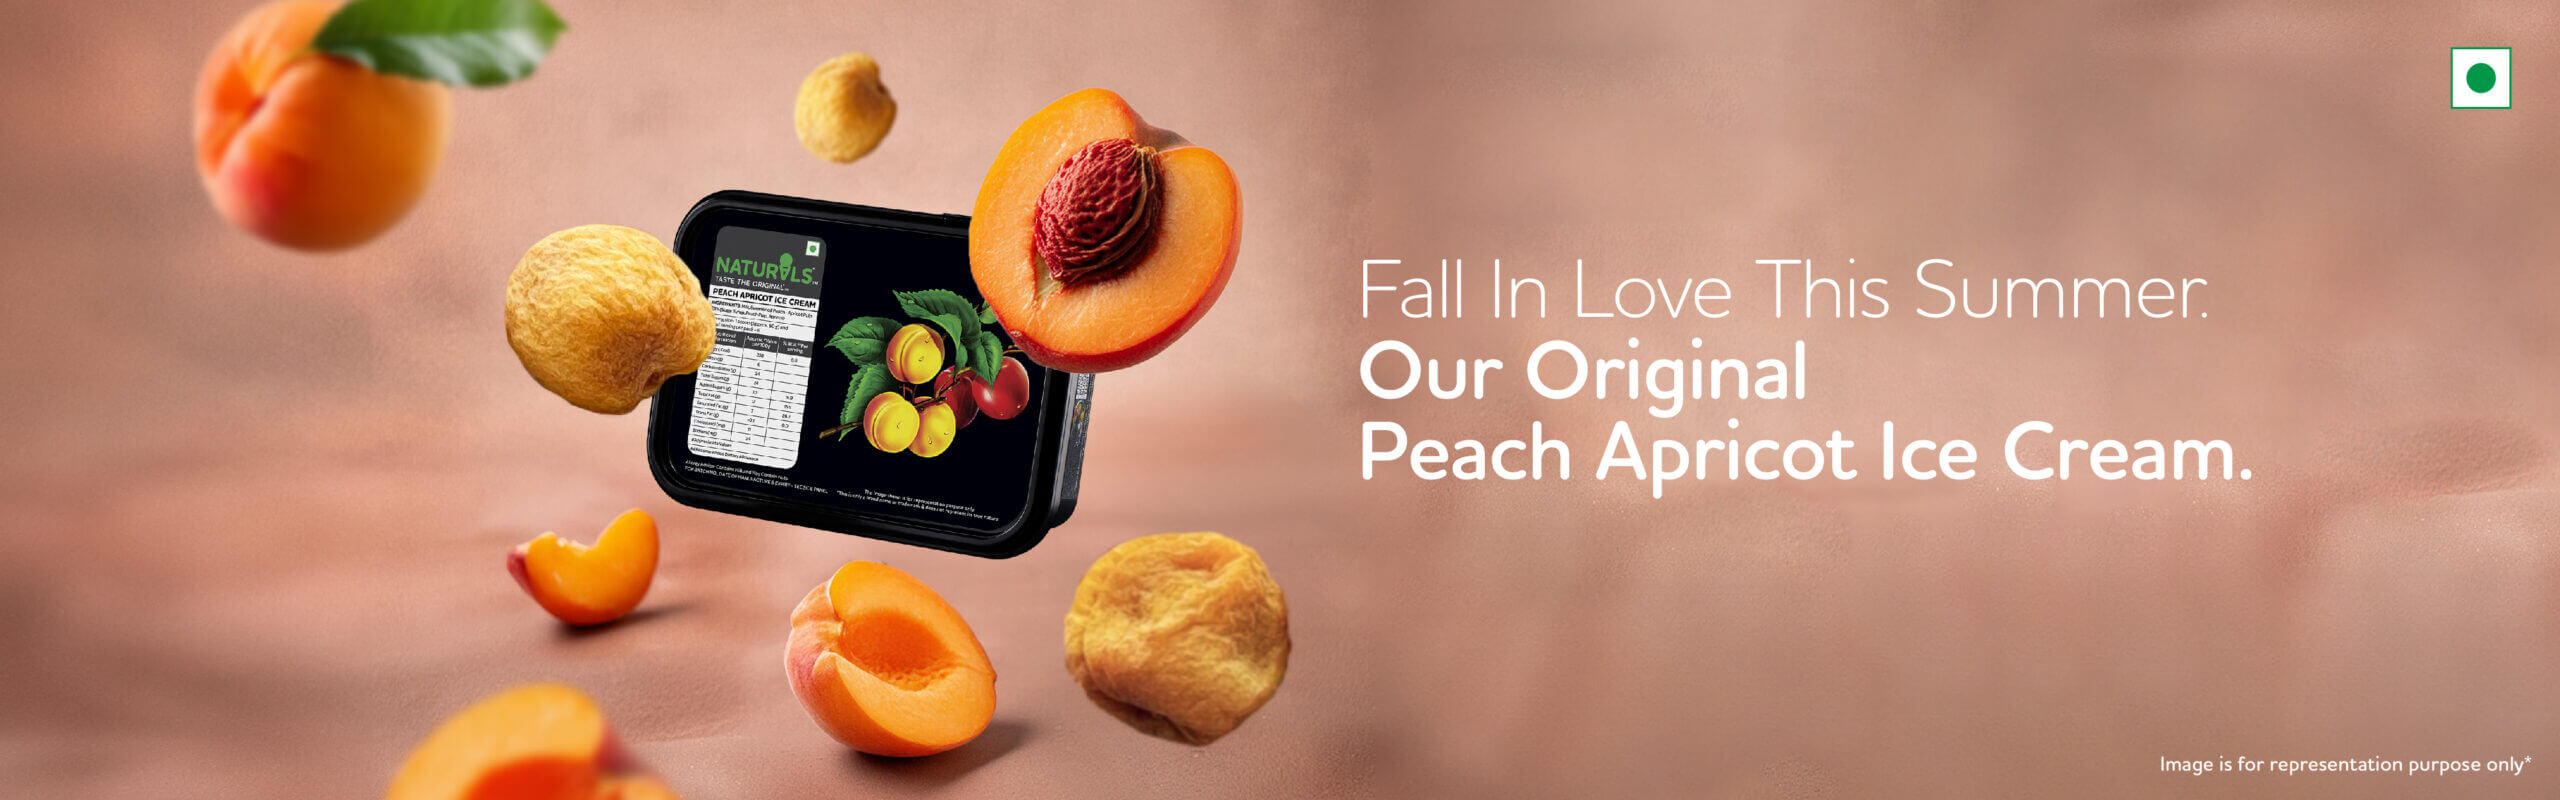 Peach-Apricot-Digital-Adaptations_1920-600-09-scaled